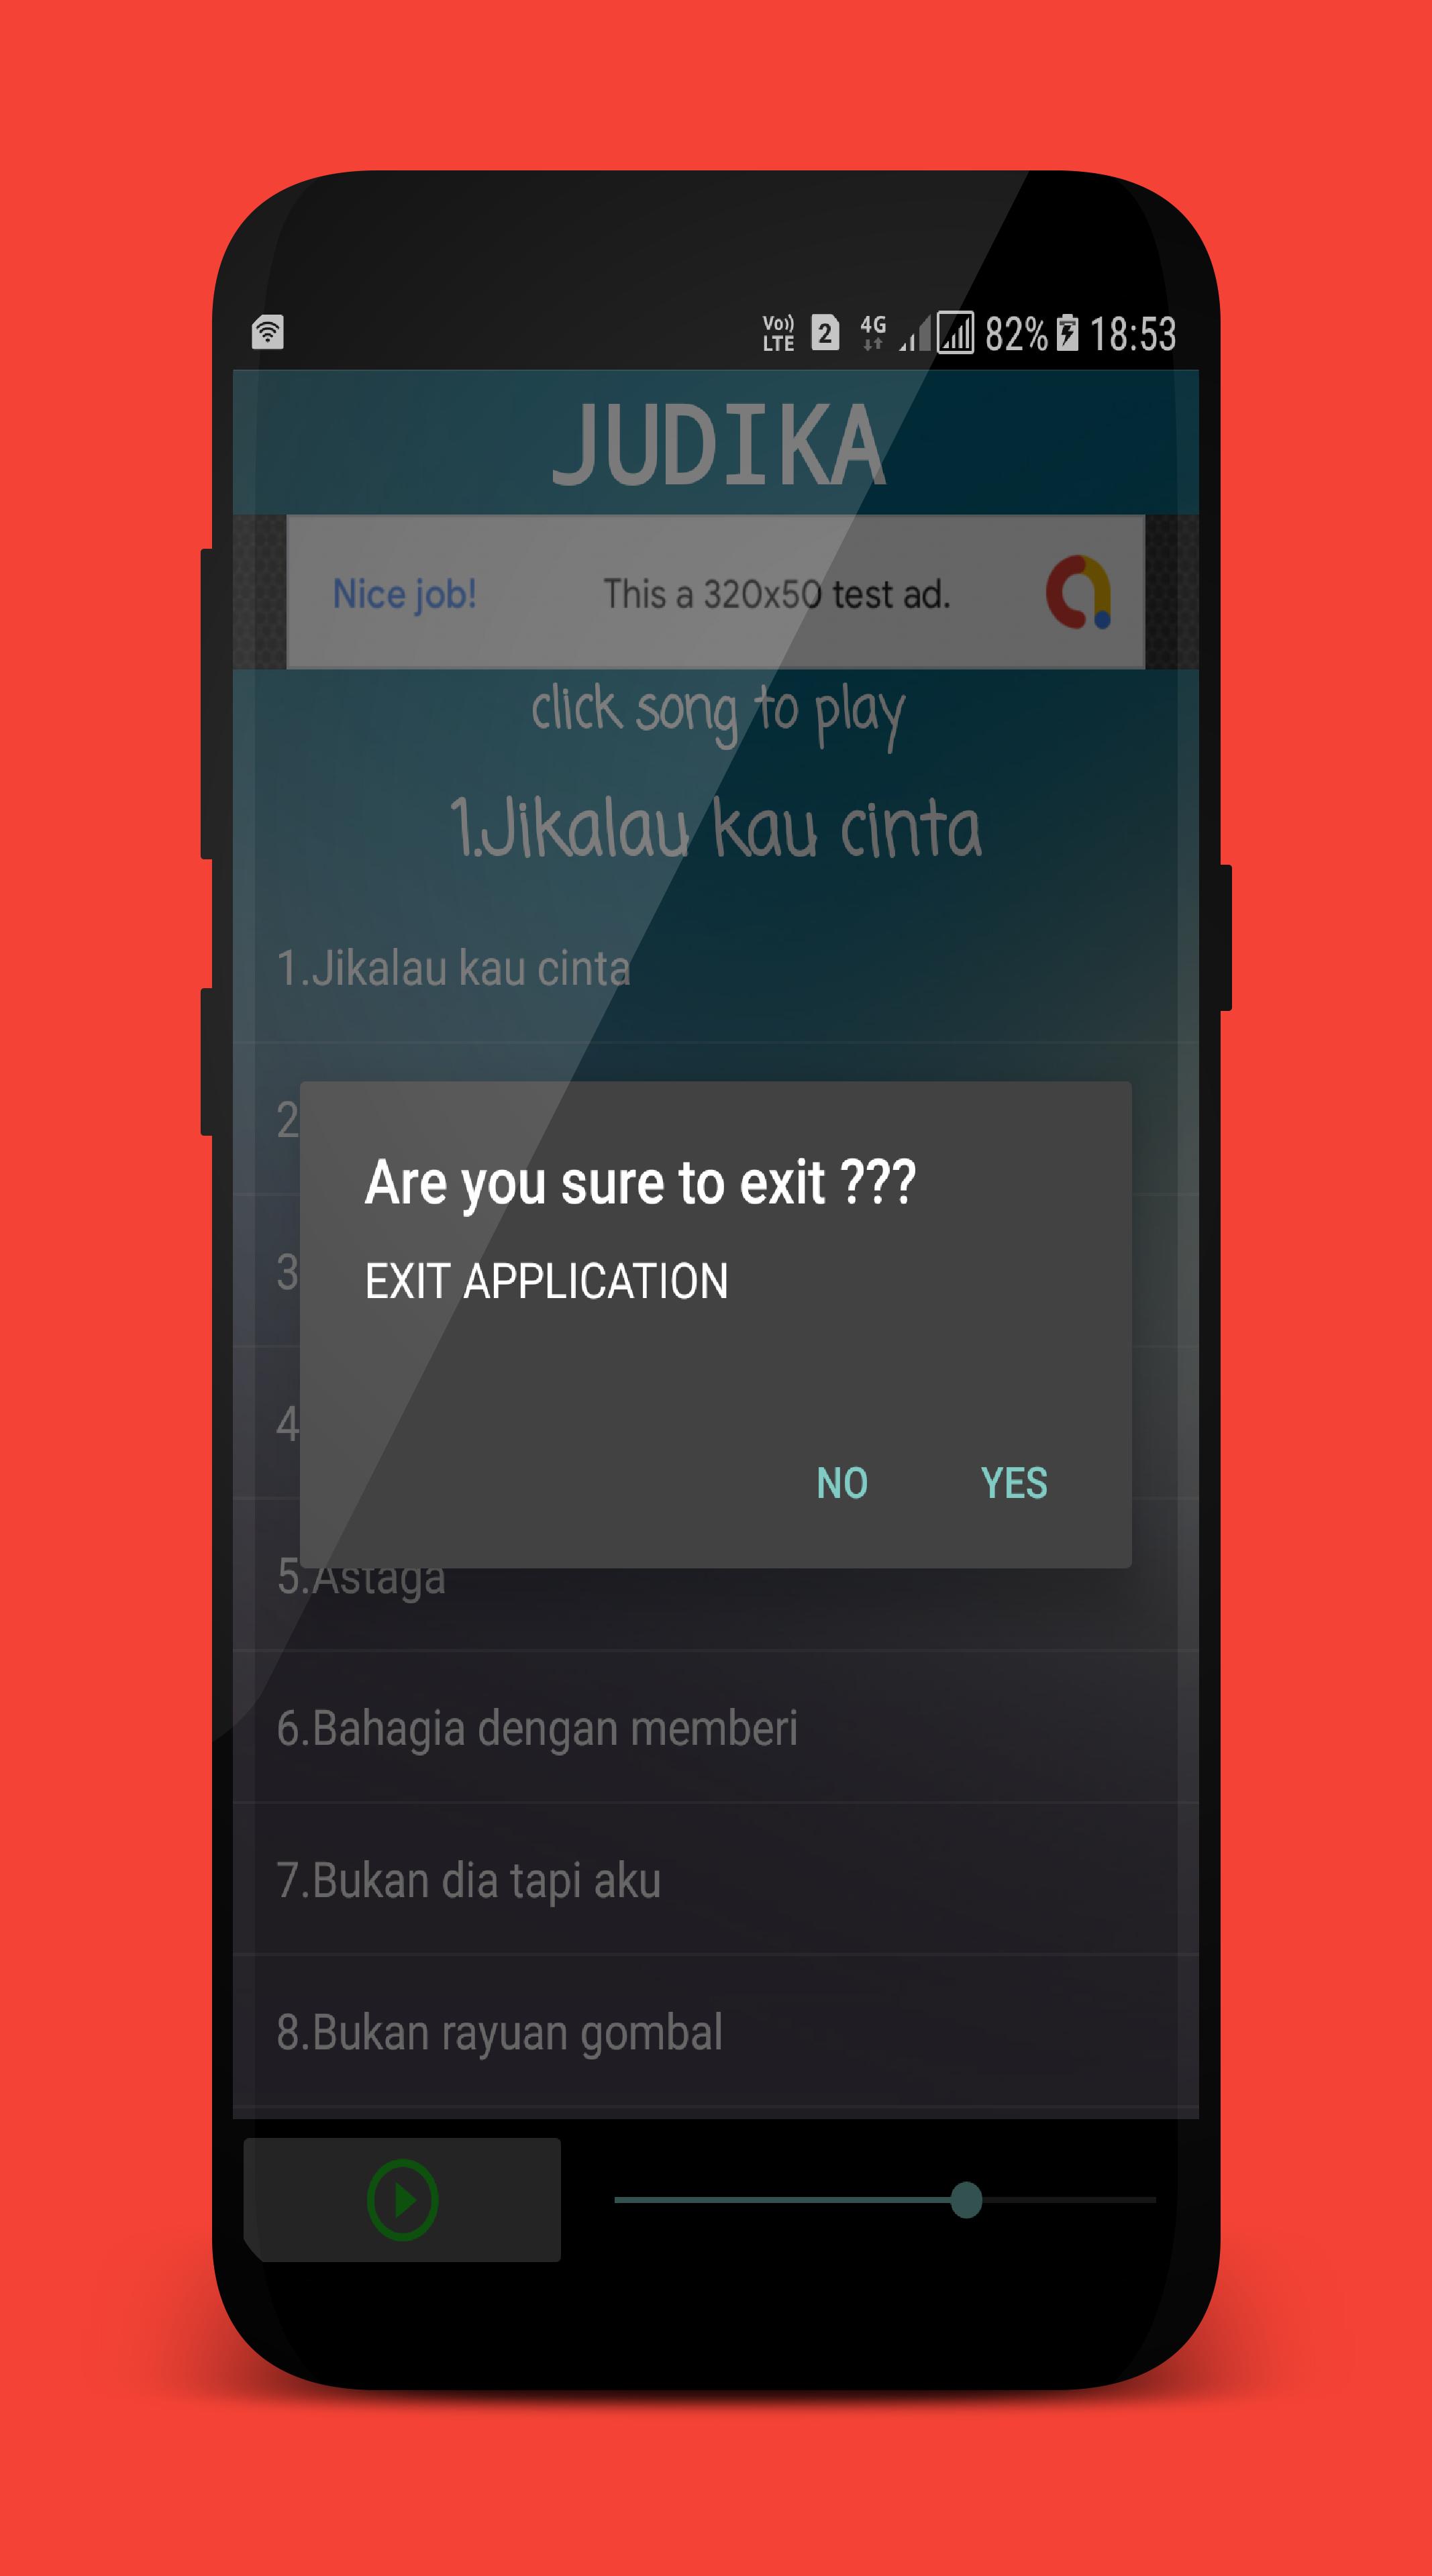 Lagu Judika Jikalau Kau Cinta Mp3 For Android Apk Download